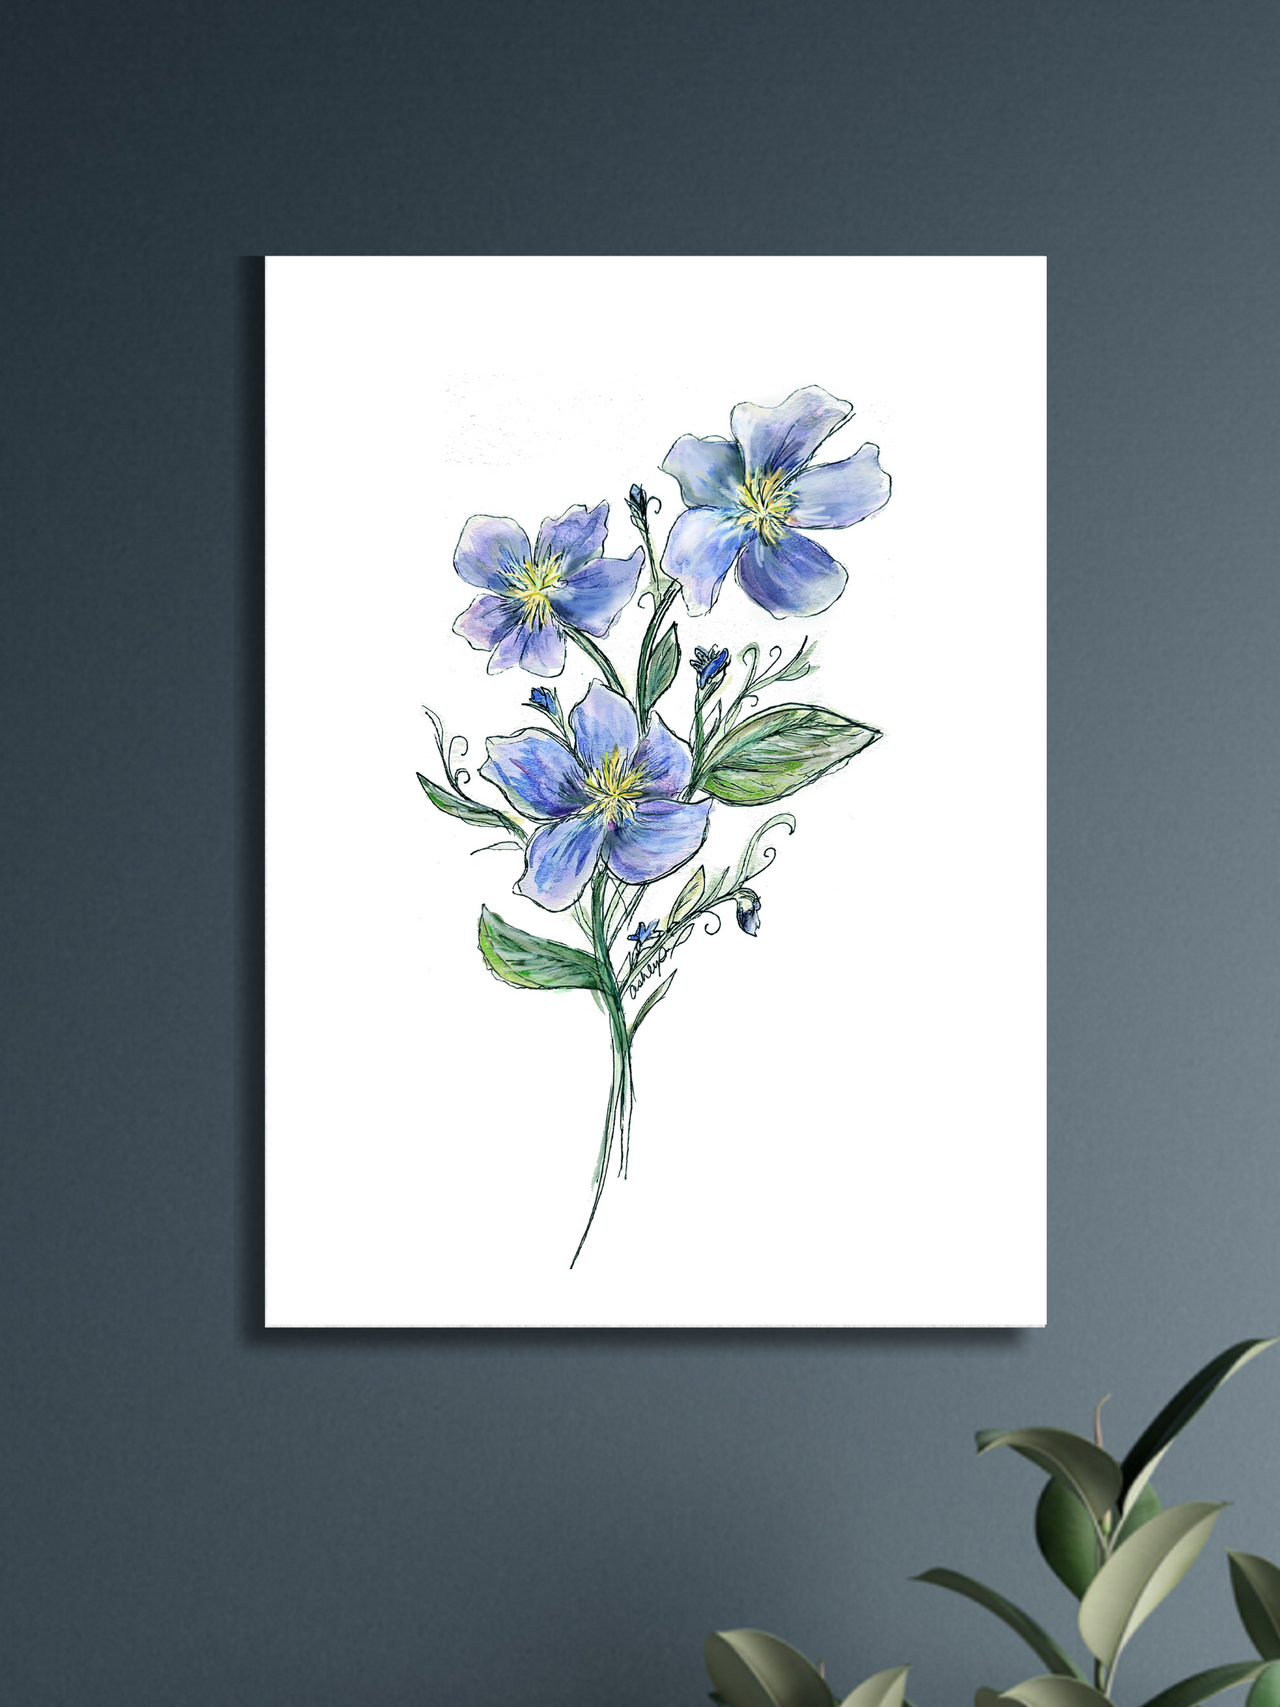 Violet Watercolor Sketch, February Birth Flower - Original Art Print